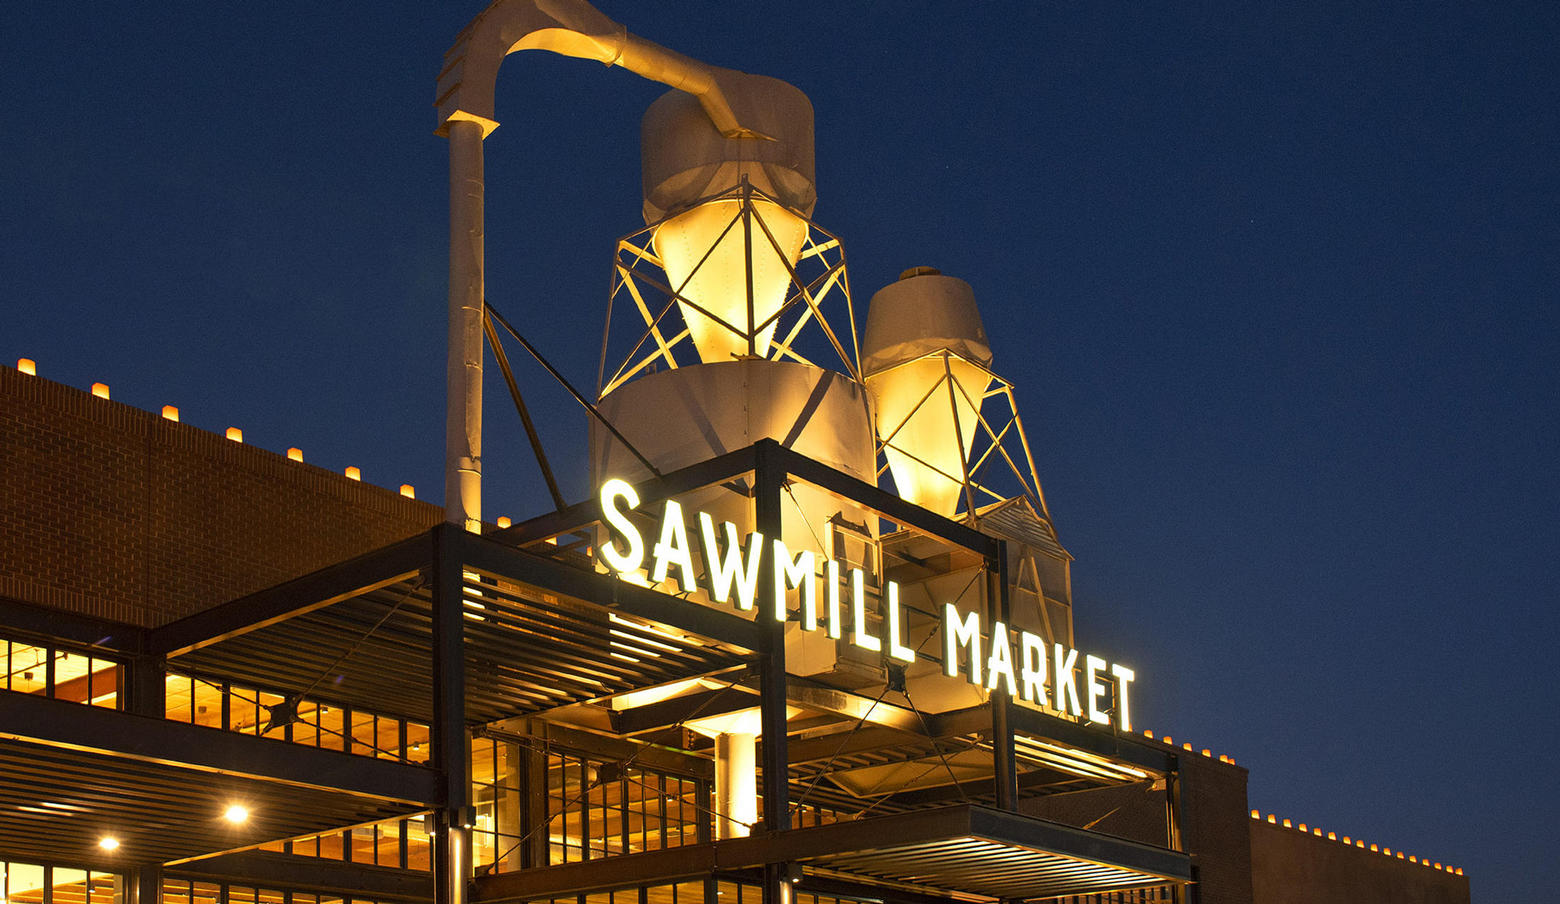 Sawmill Market with luminarias at night